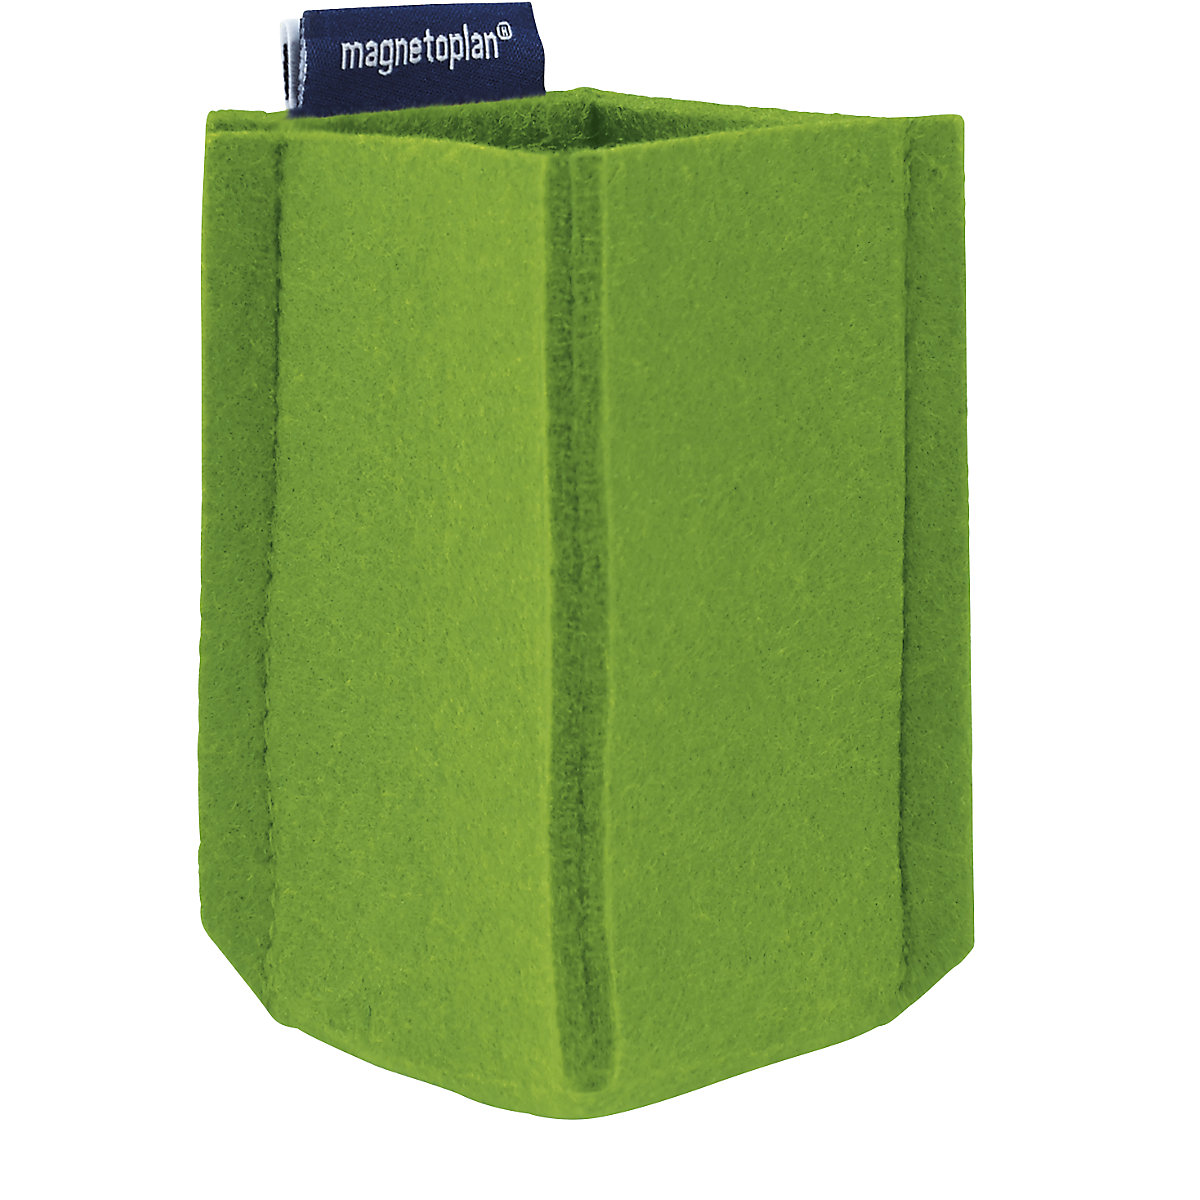 Zásobník na písacie potreby magnetoTray – magnetoplan, SMALL, v x š x h 100 x 60 x 60 mm, zelená-4